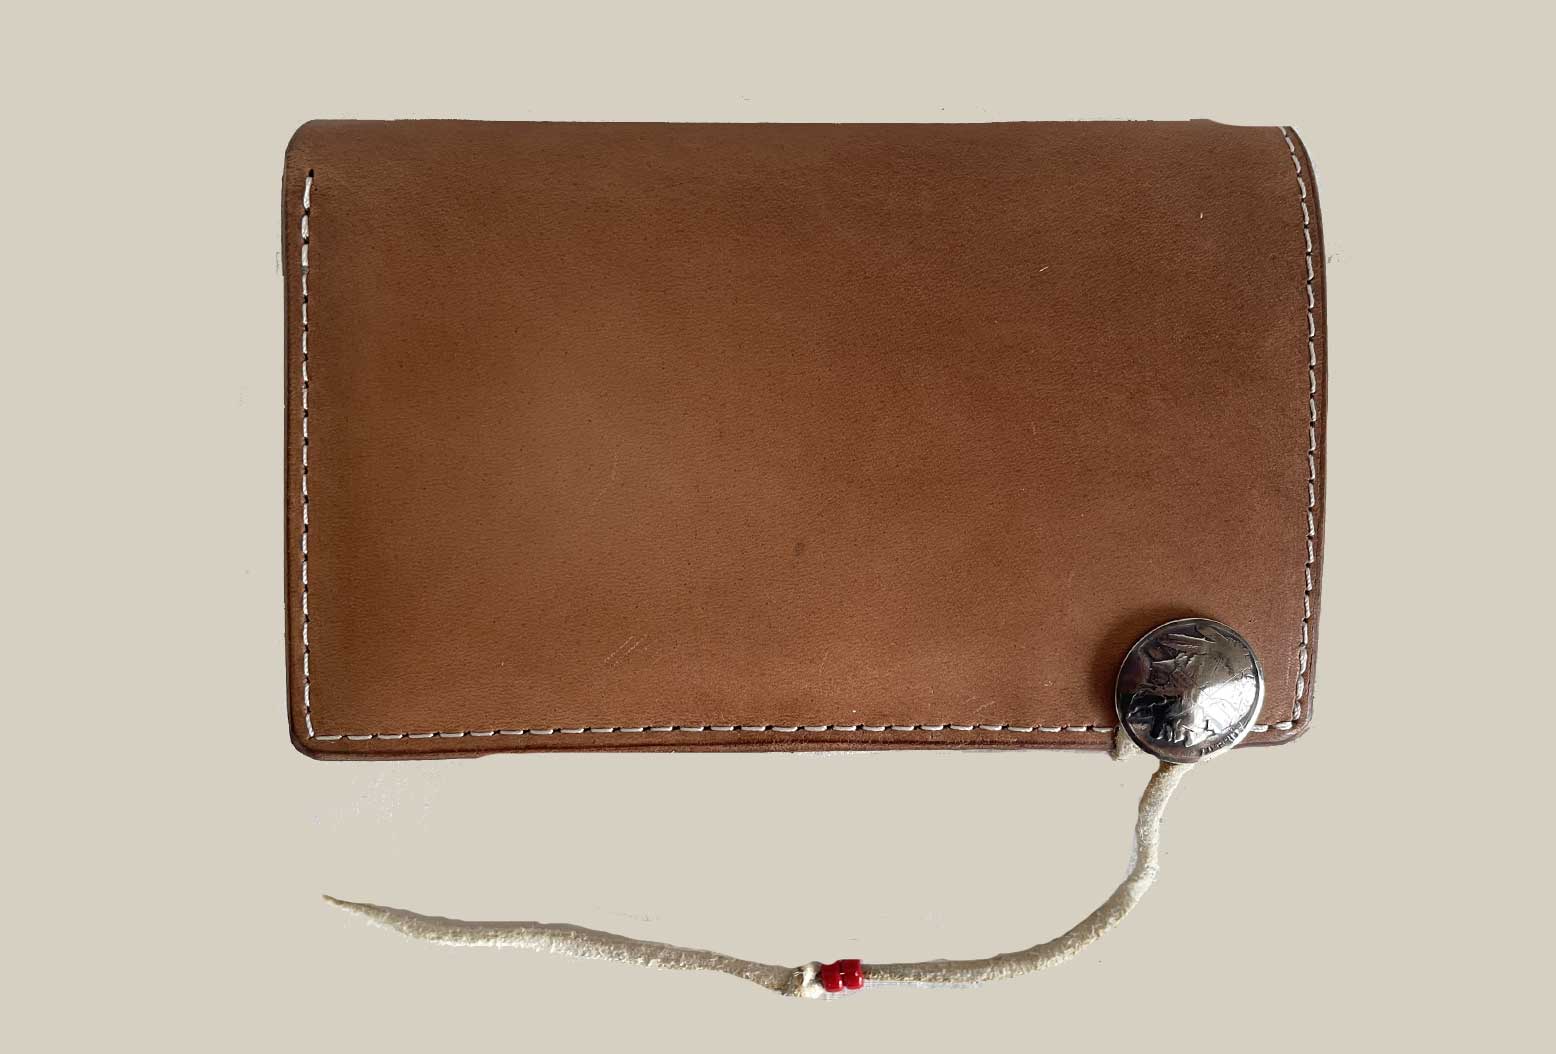 【Koudlka Leather(クーデルカ レザー)】【gb-1b】ビルフォード 2つ折り財布